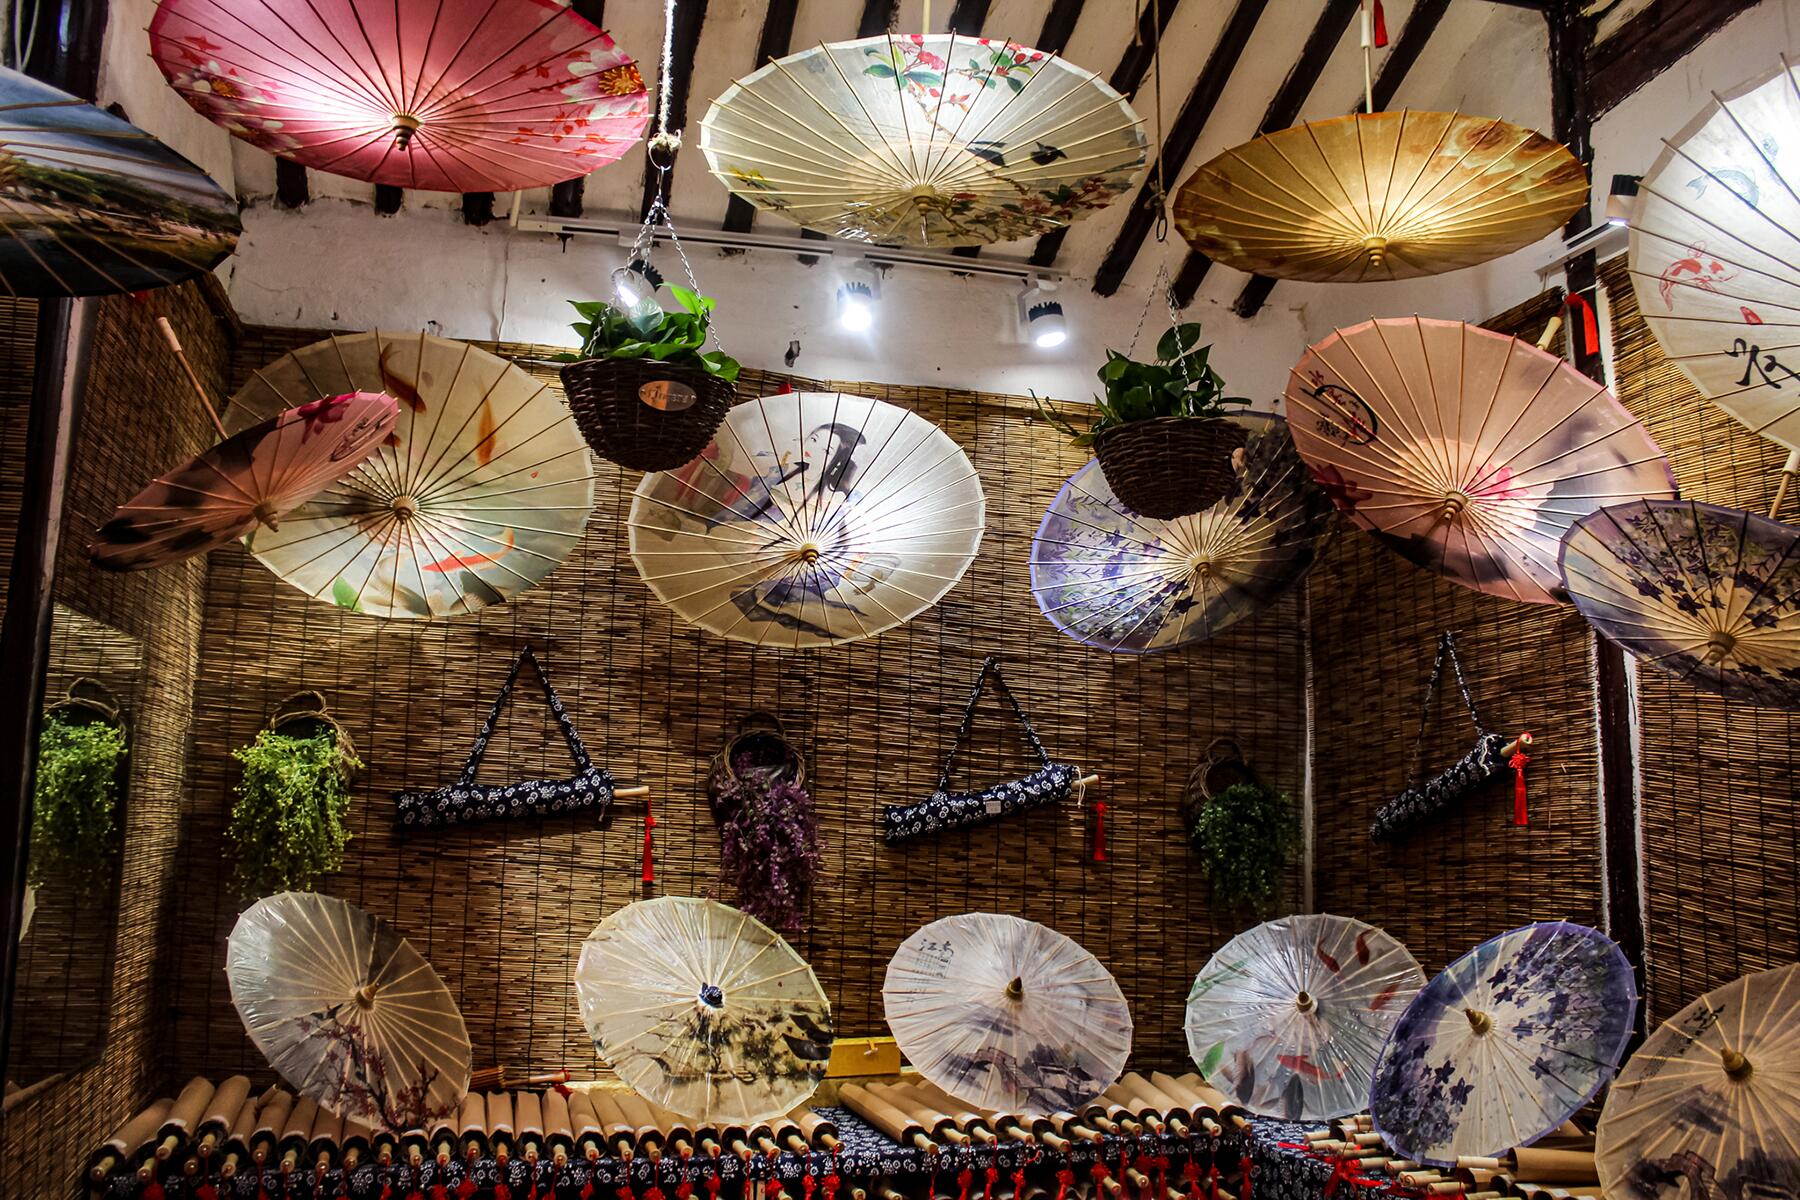 photo 6 - umbrellas in small shop - credit Dana Givens